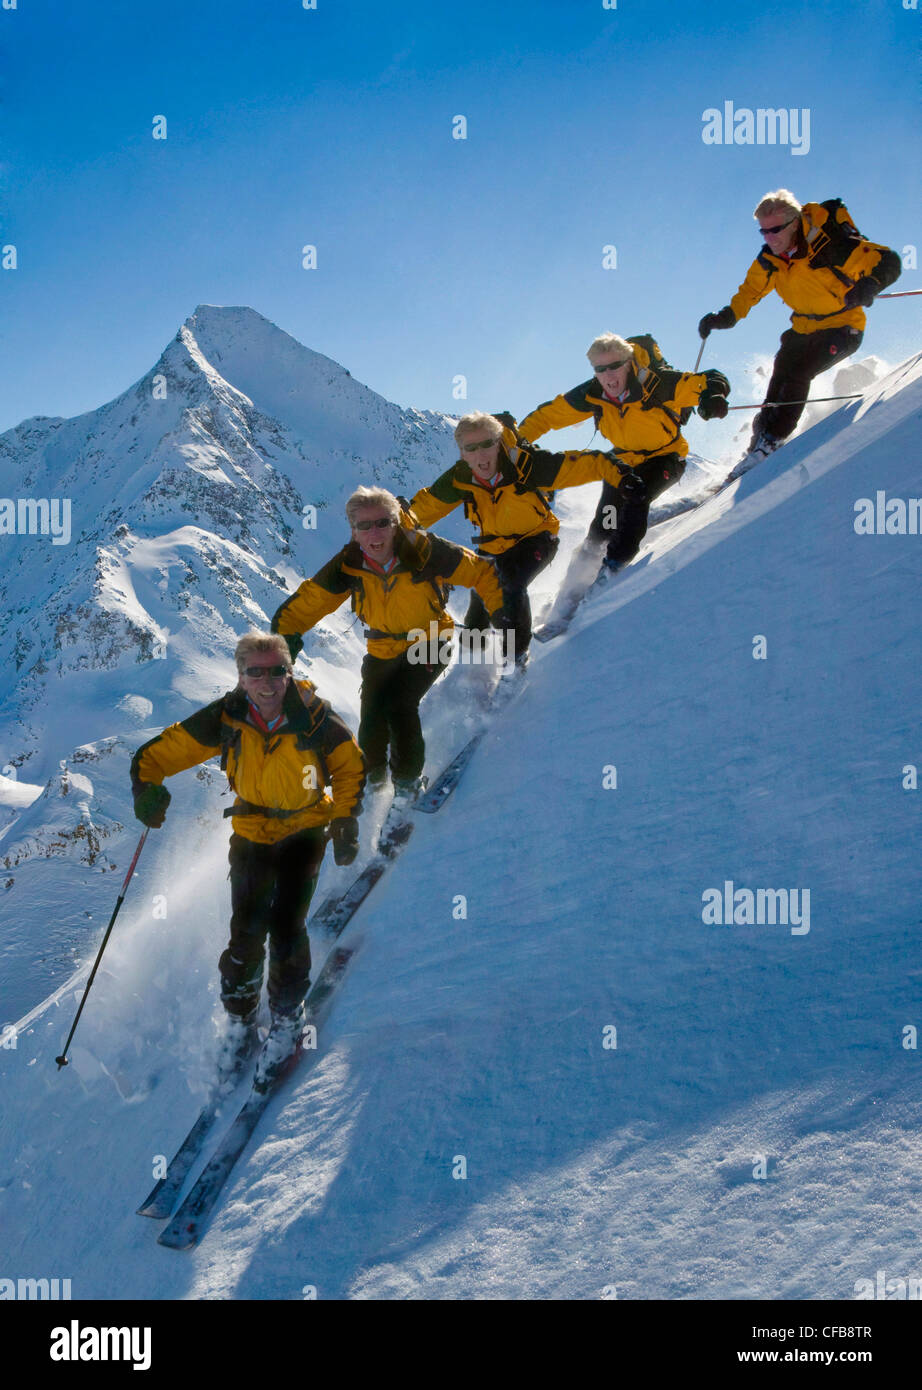 Tambo, mountain, mountains, ski, skiing, sport, spare time, leisure, adventure, winter, snow, winter sports, canton, Graubünden, Stock Photo